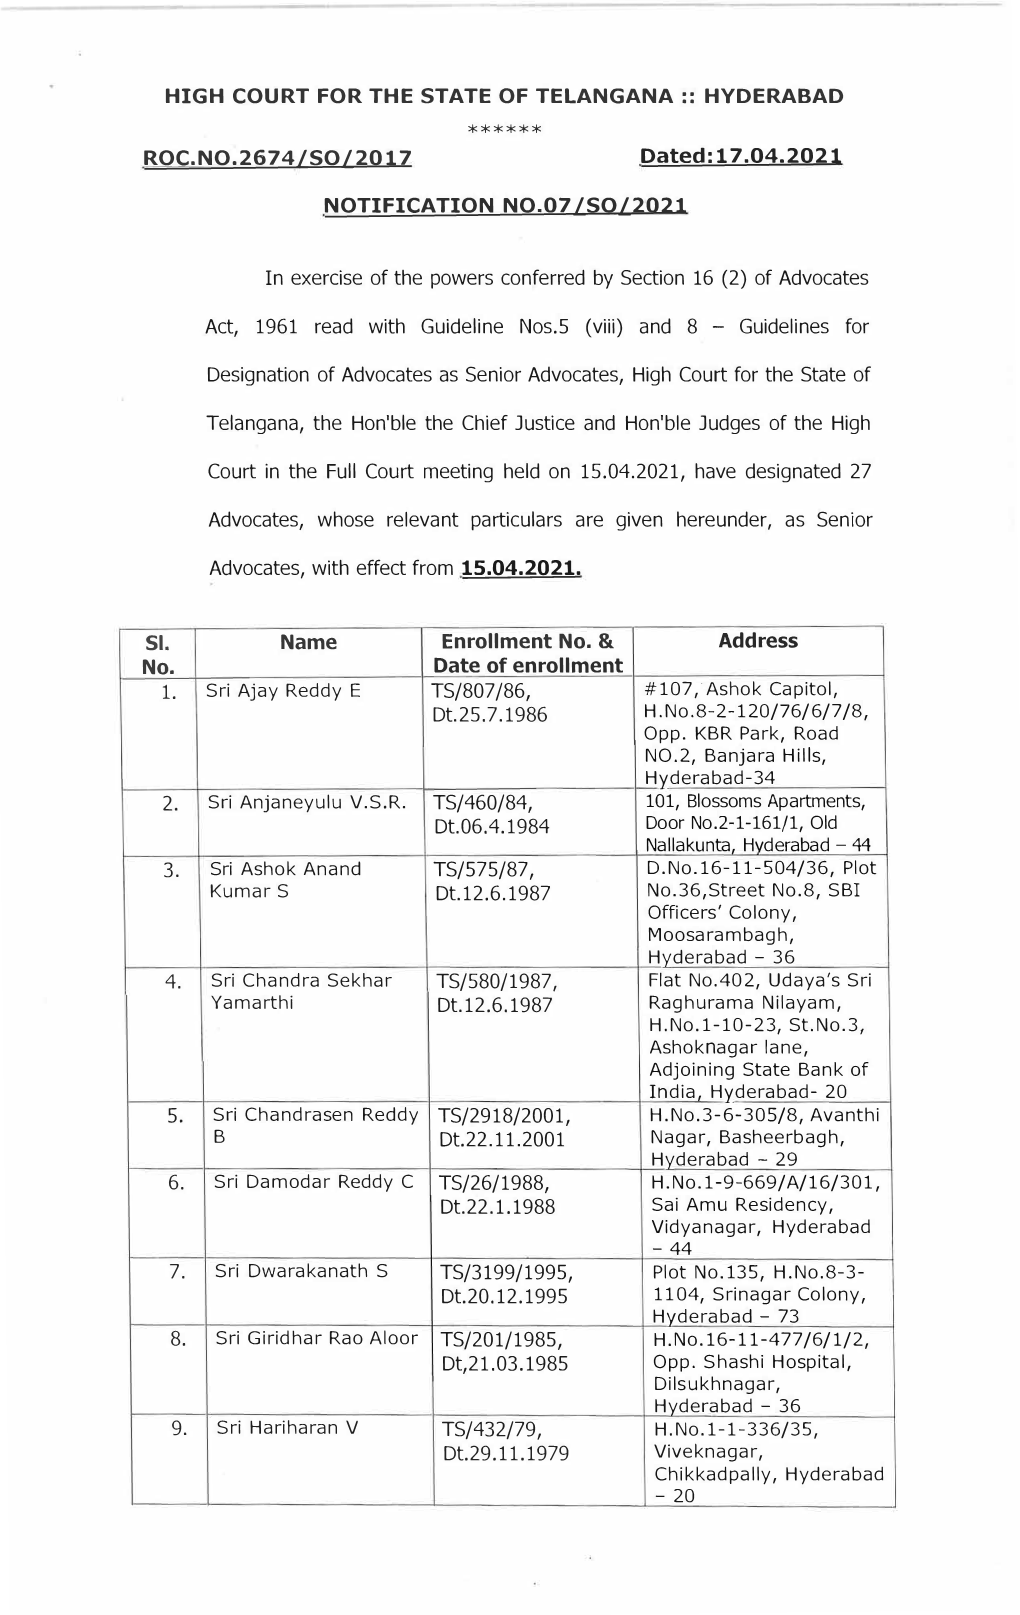 Designation of Advocates As Senior Advocates, High Court for the State Of